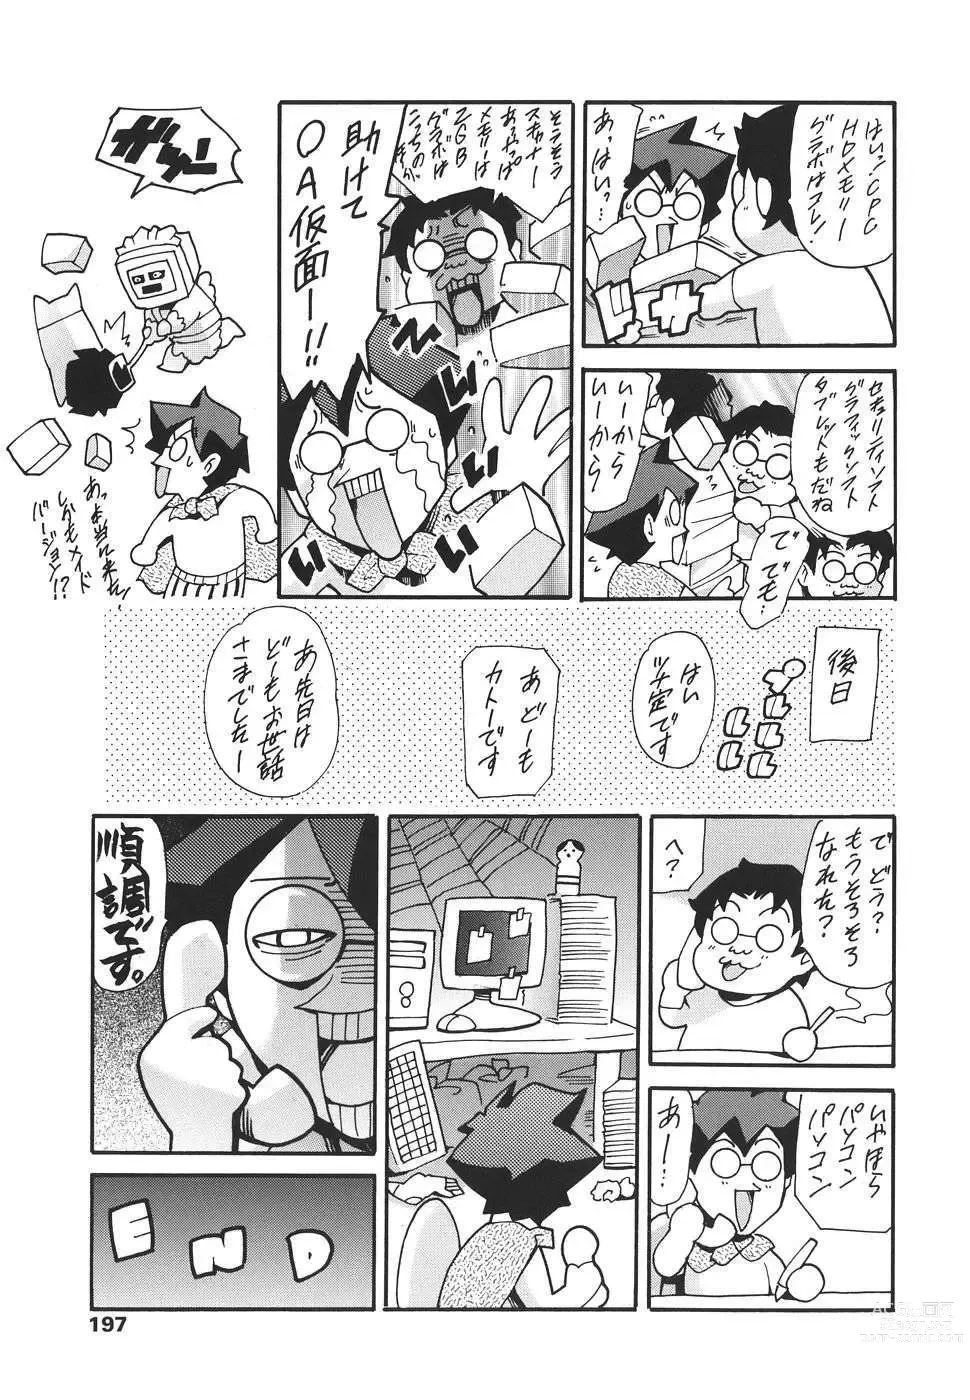 Page 197 of manga Katei no Jijou - Familys circumstances